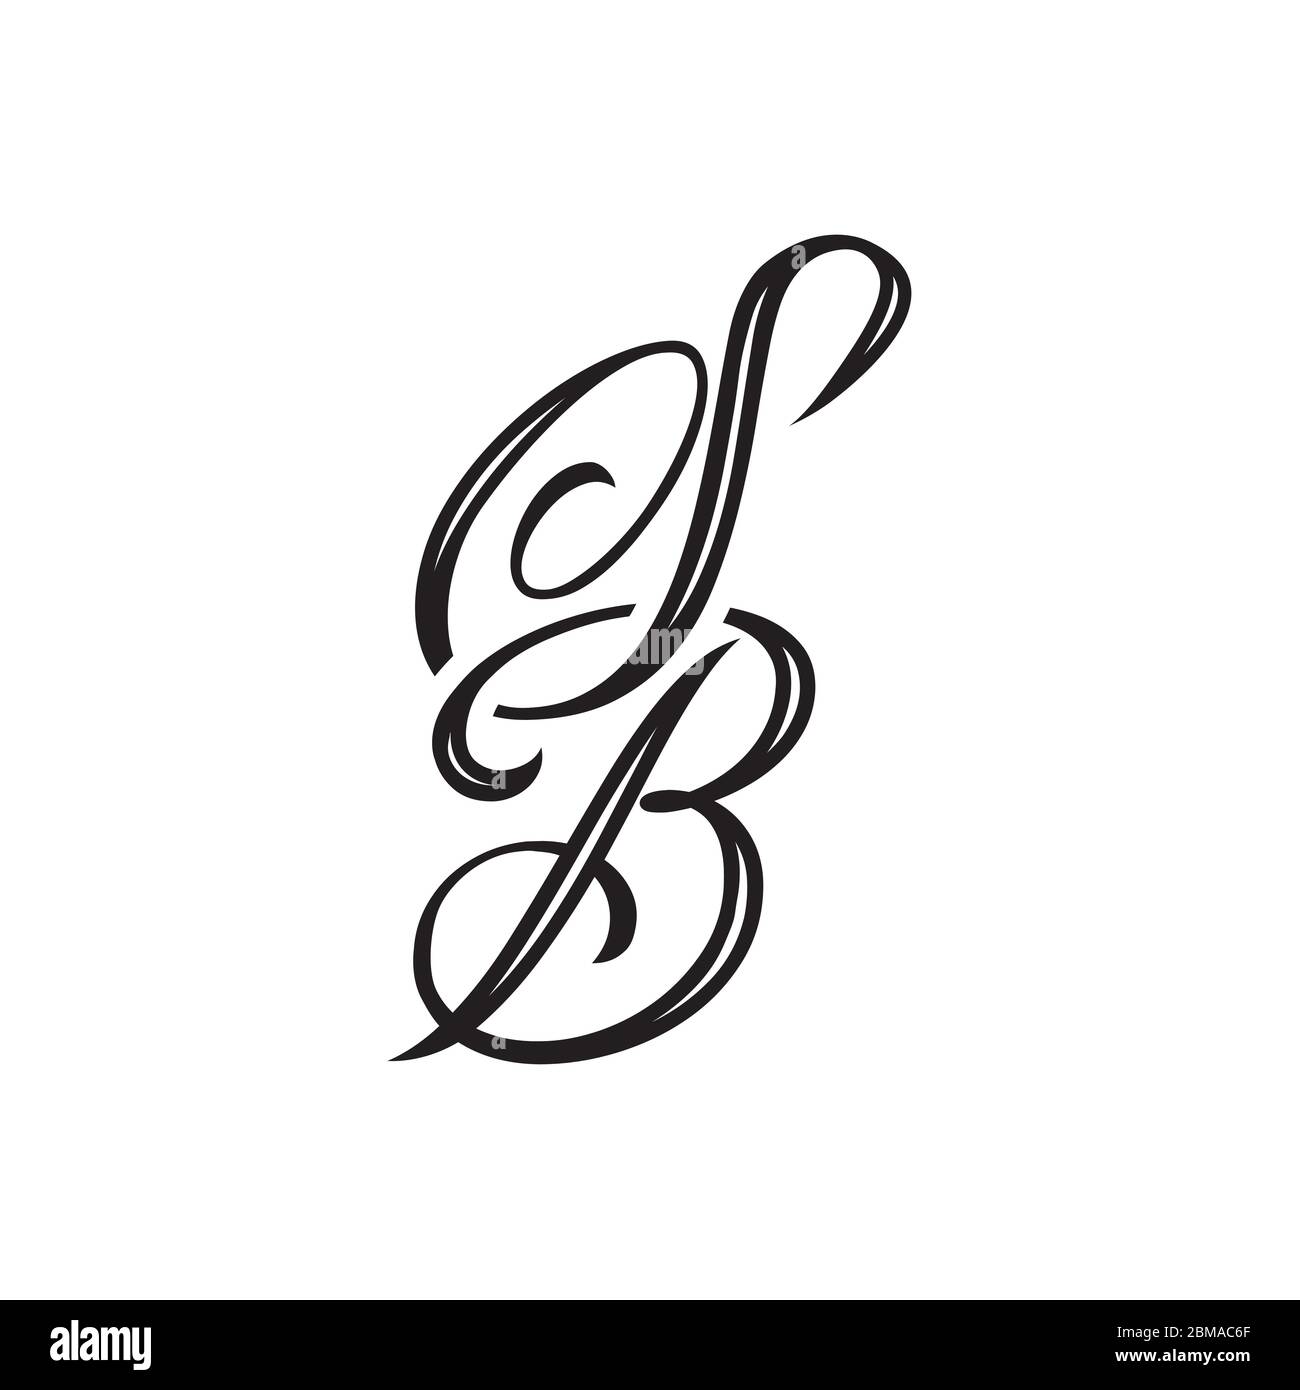 S B tattoo letter design vector Stock Vector Image & Art - Alamy